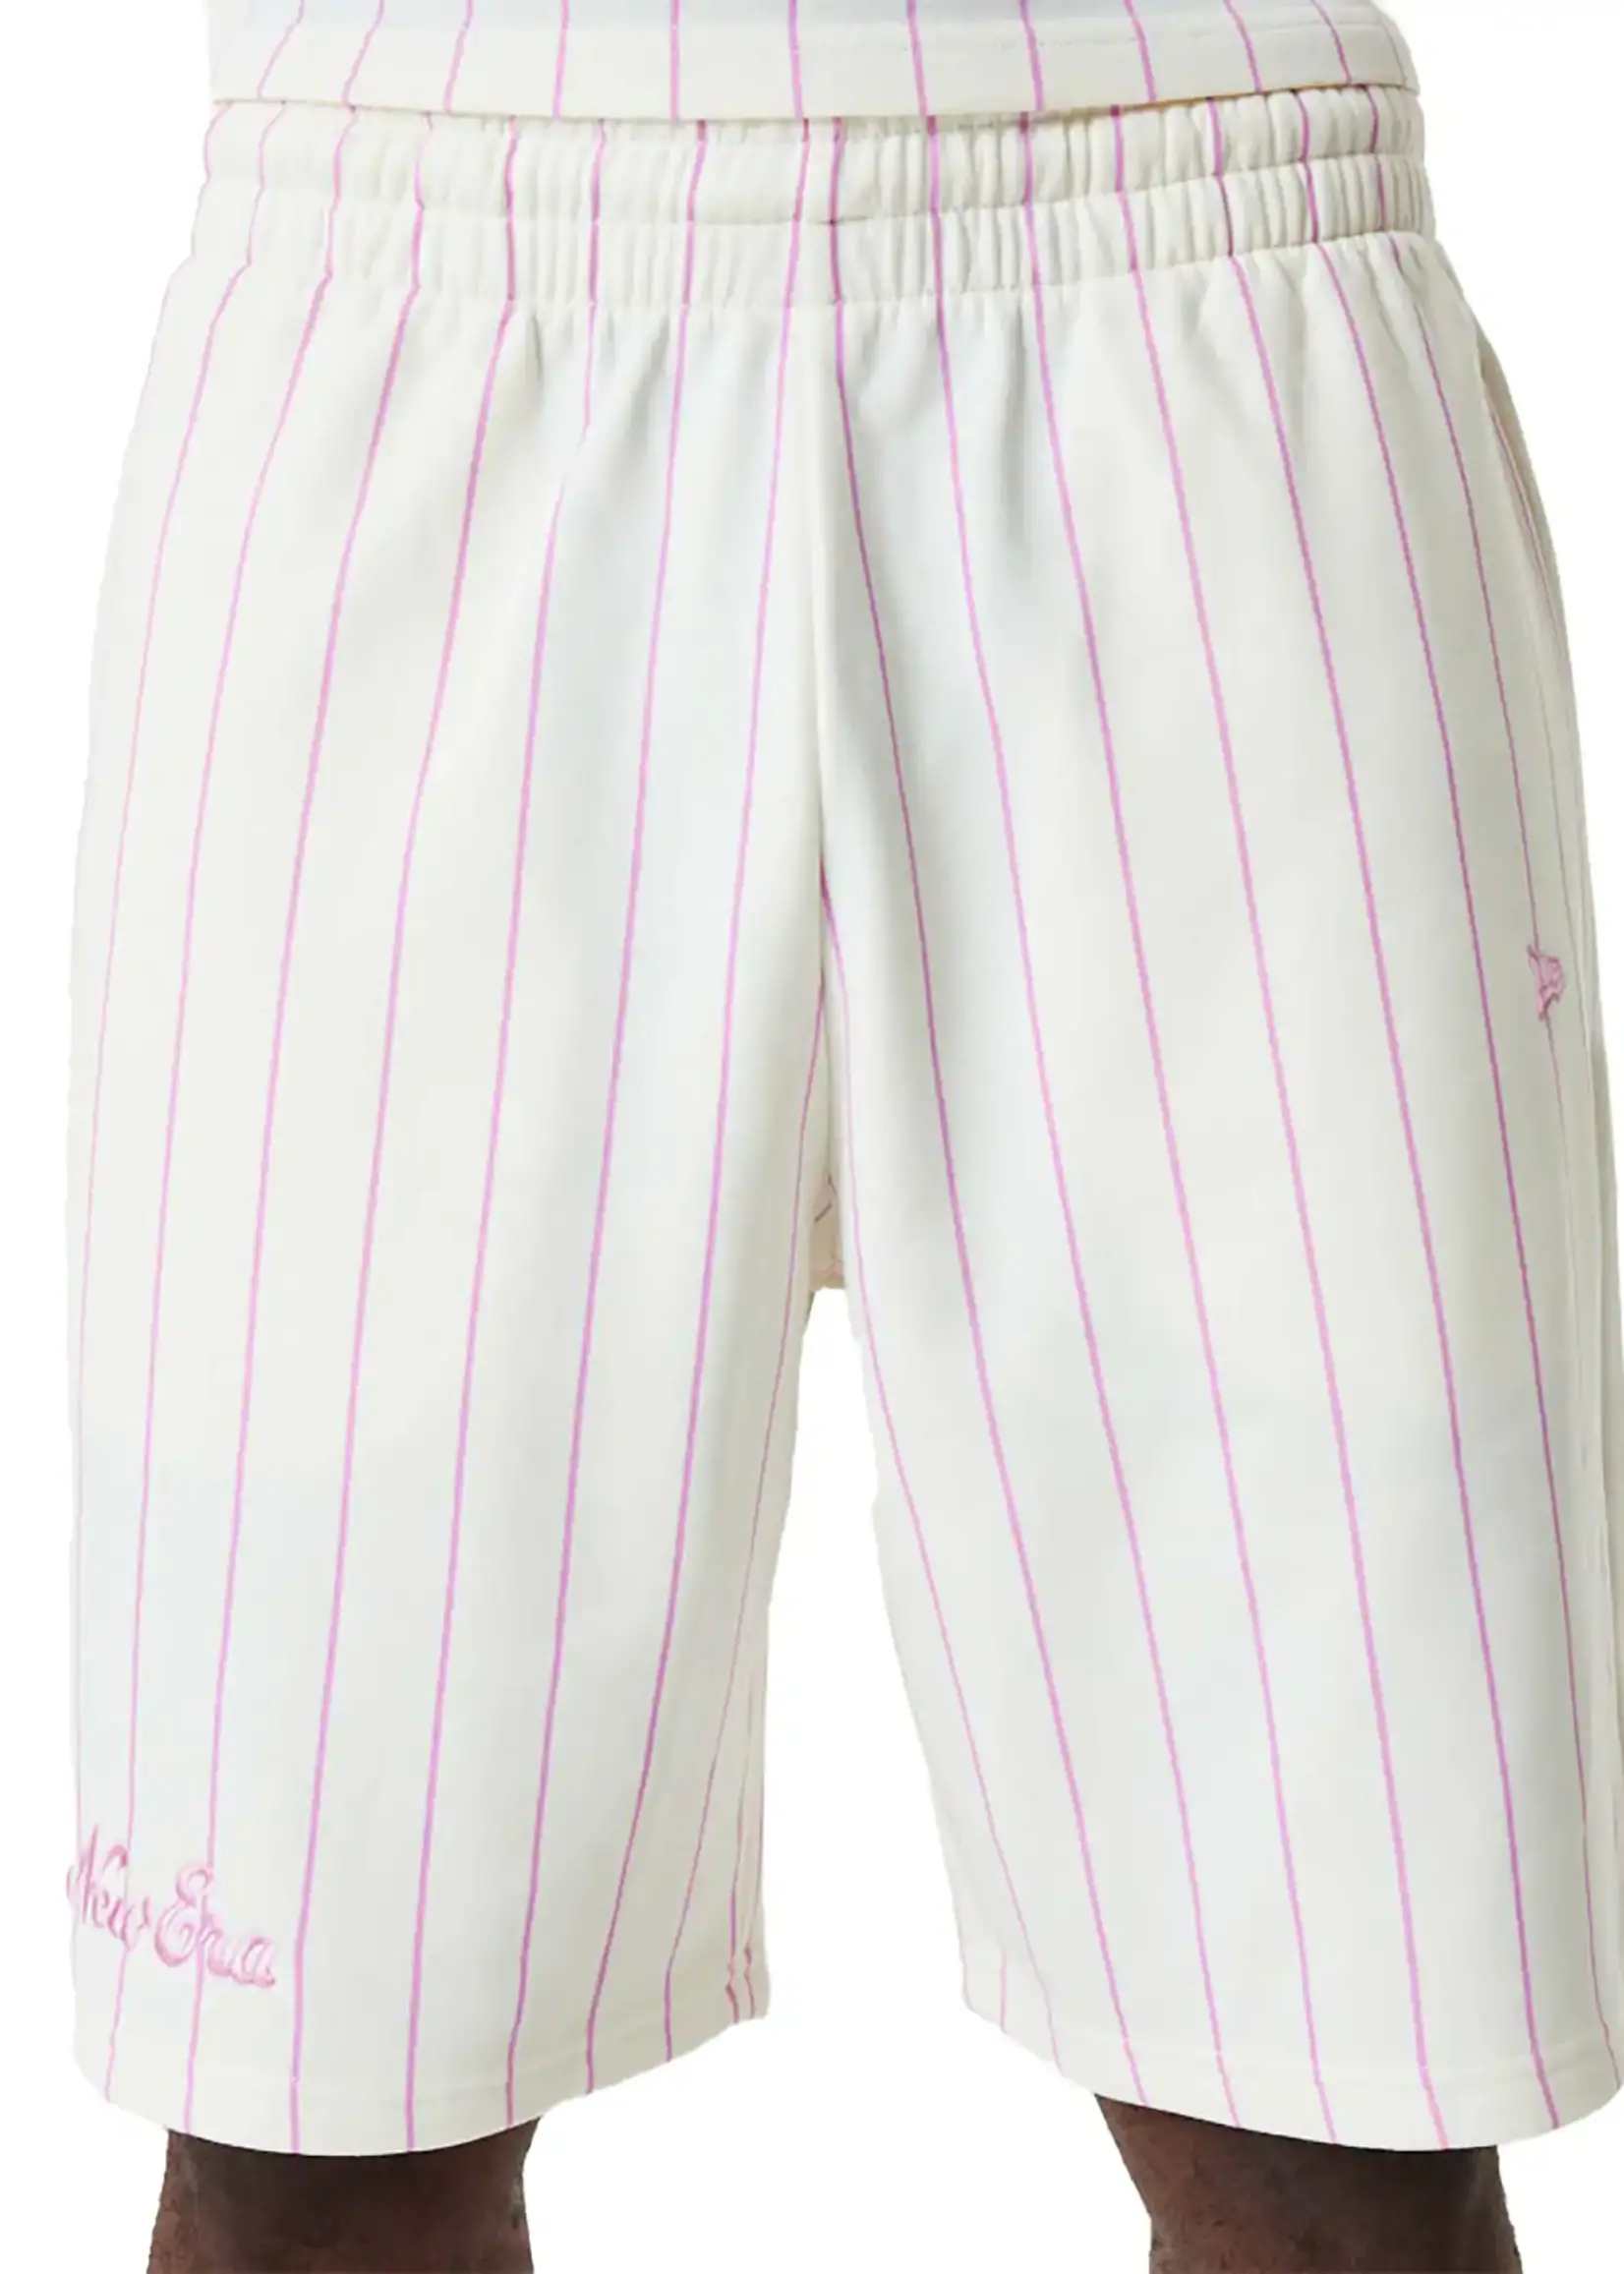 New Era Pinstripe Shorts Off White Pink